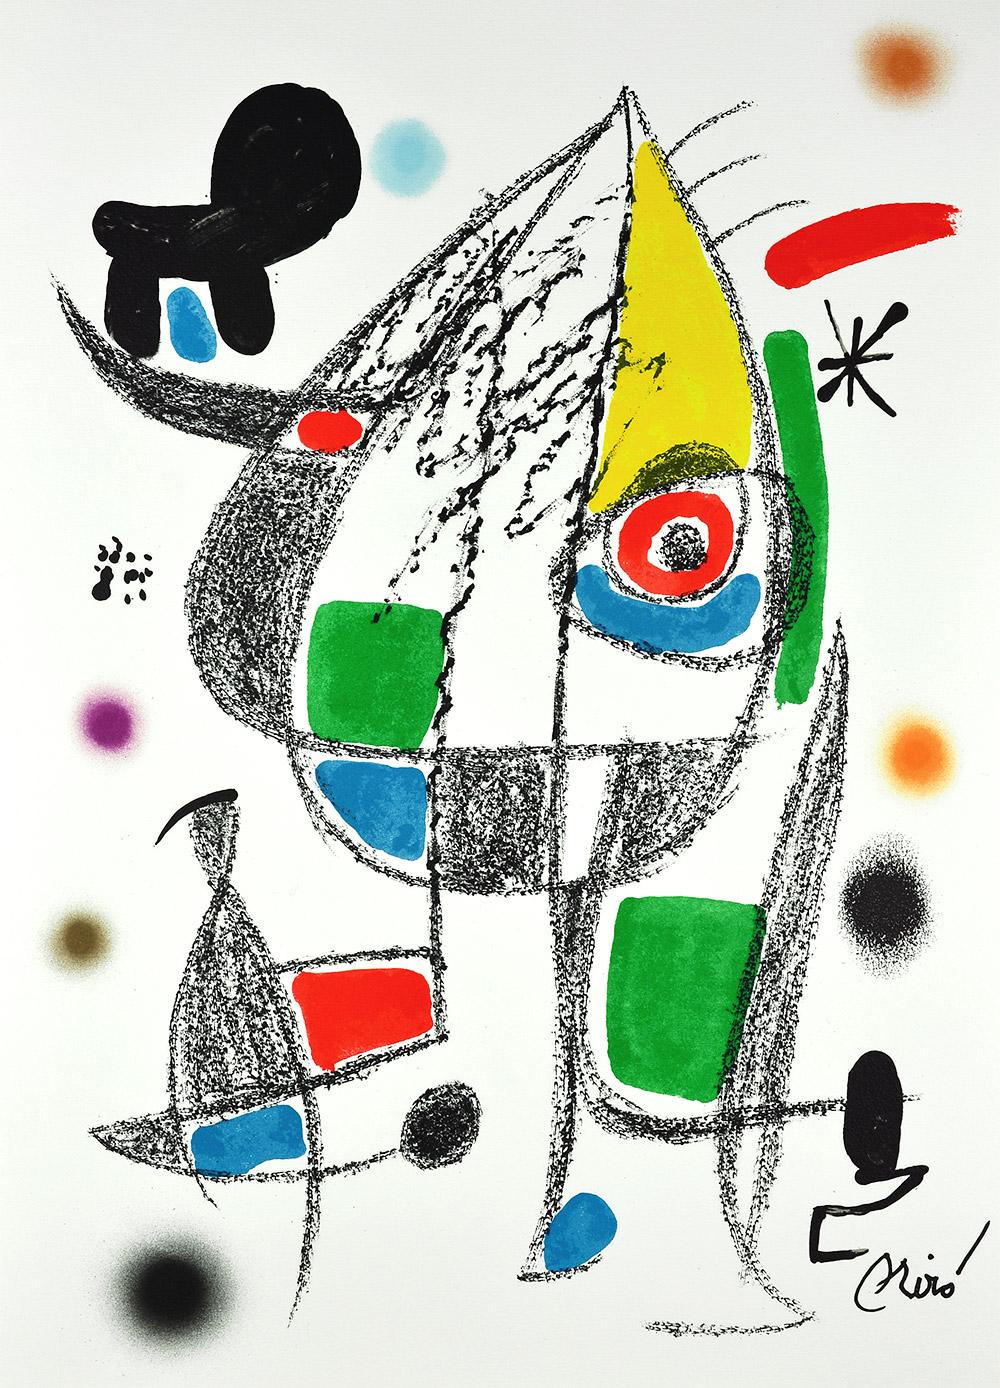 Joan Miró - Maravillas con variaciones acrósticas en el jardín de Miró XX
Date of creation: 1975
Medium: Lithograph on Gvarro paper
Edition: 1500
Size: 49,5 x 35,5 cm
Condition: In very good conditions and never framed
Observations: Lithograph on